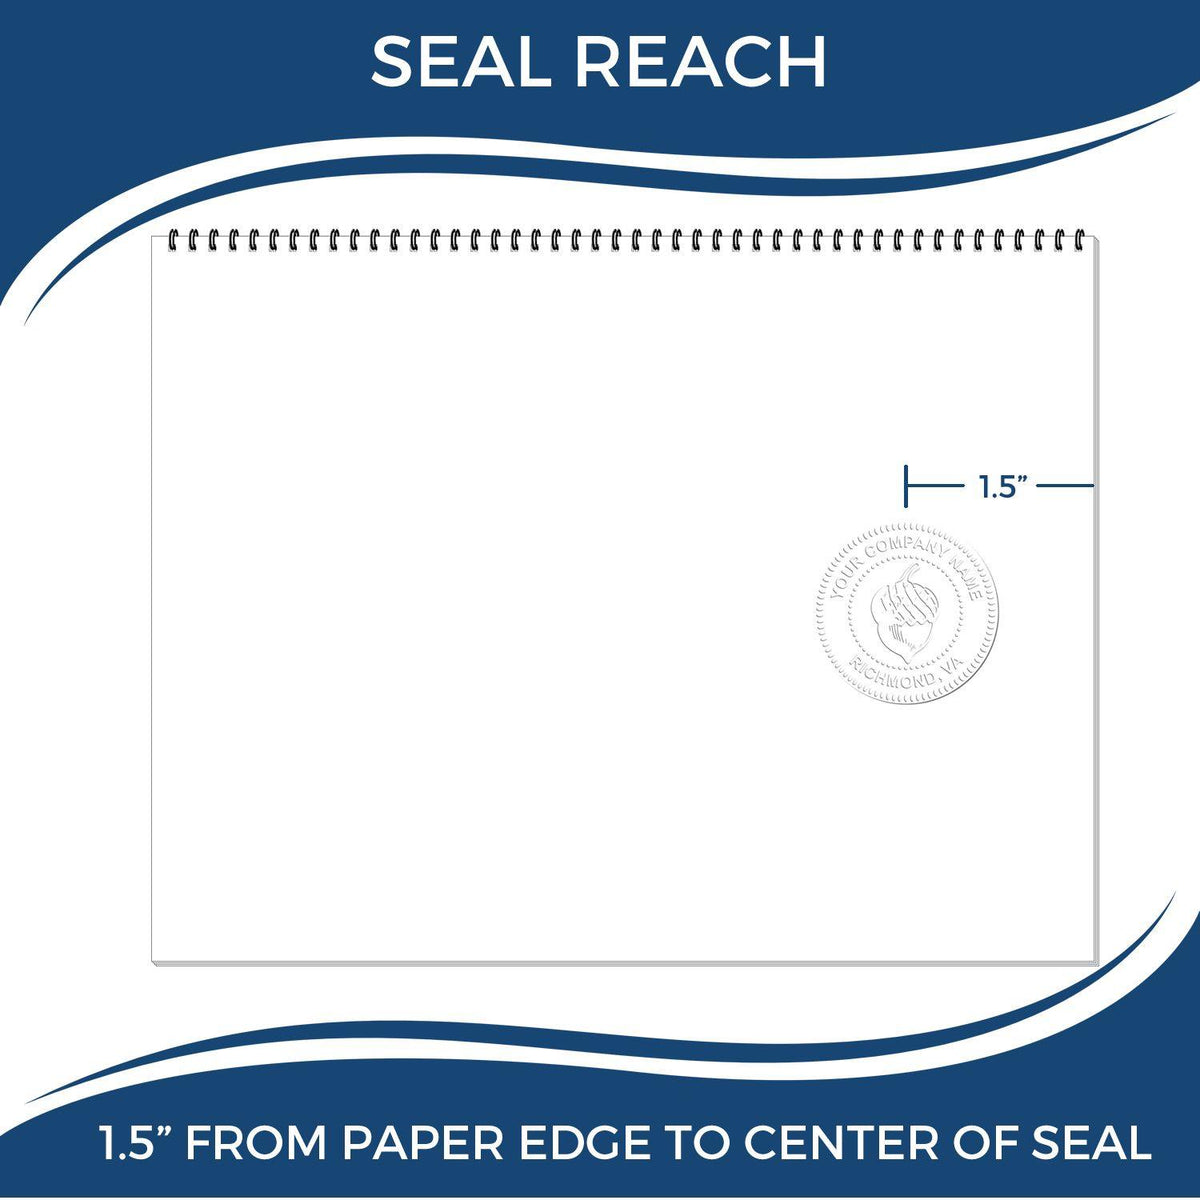 Professional Hybrid Seal Embosser - Engineer Seal Stamps - Embosser Type_Handheld, Embosser Type_Hybrid, Type of Use_Professional